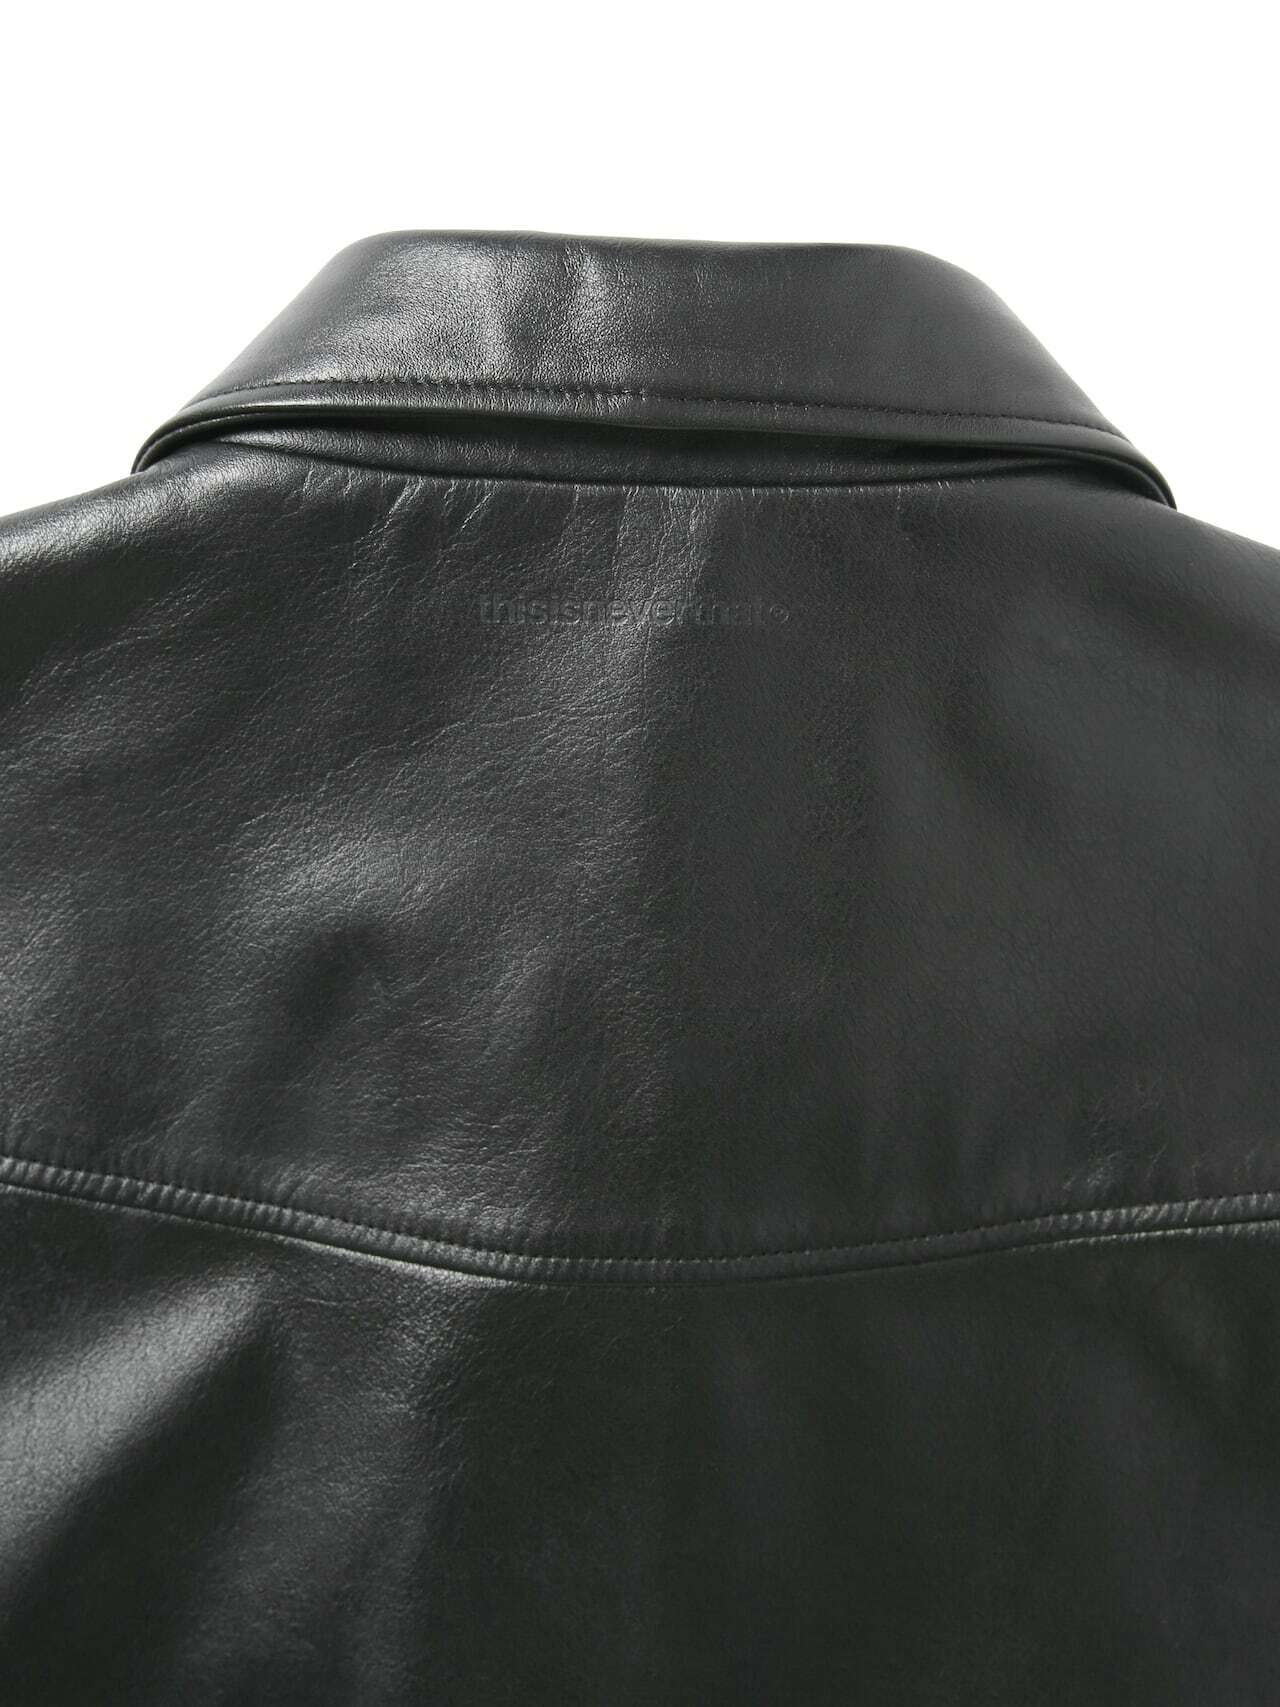 Leather-Sports-Jacket-Black7.jpg